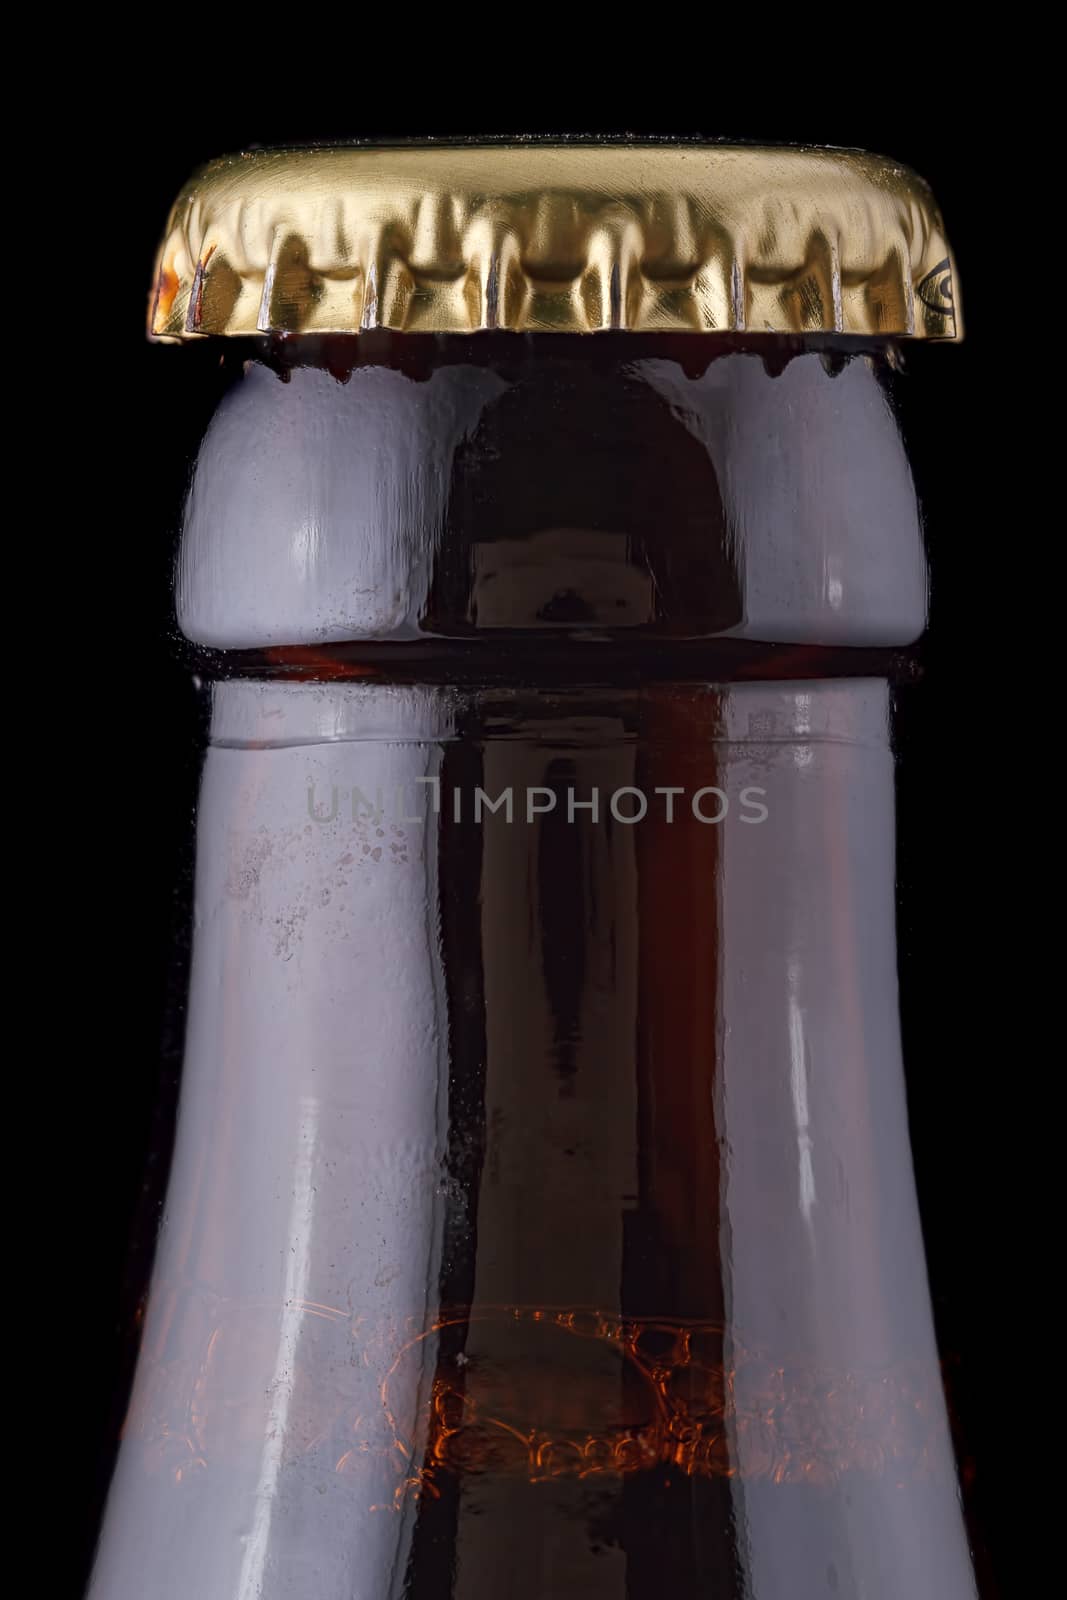 Closed, brown beer bottle on a black background.